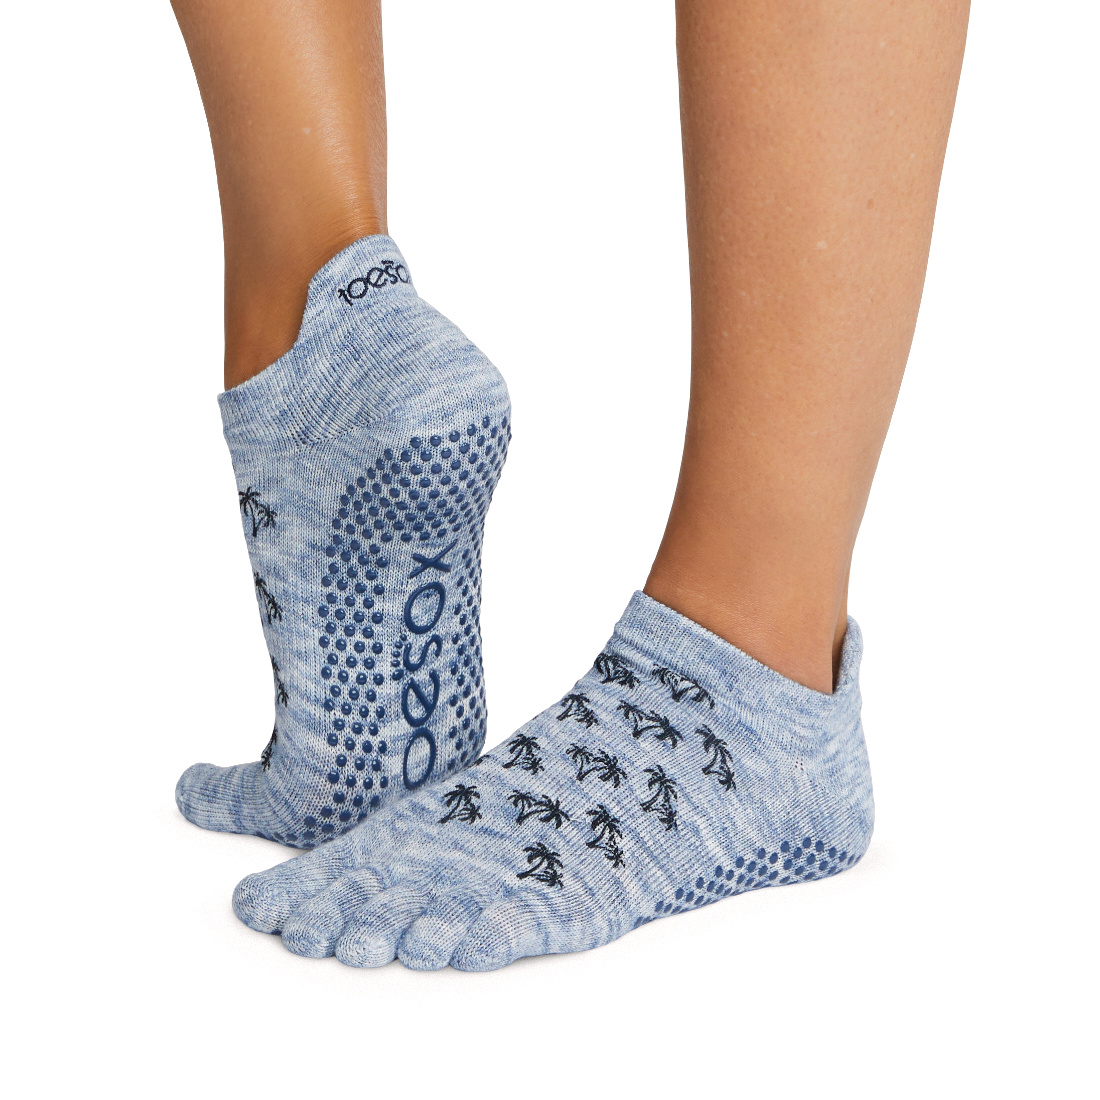 Full Toe Toe Luna in Olive Glam Grip Socks - ToeSox - Mad-HQ